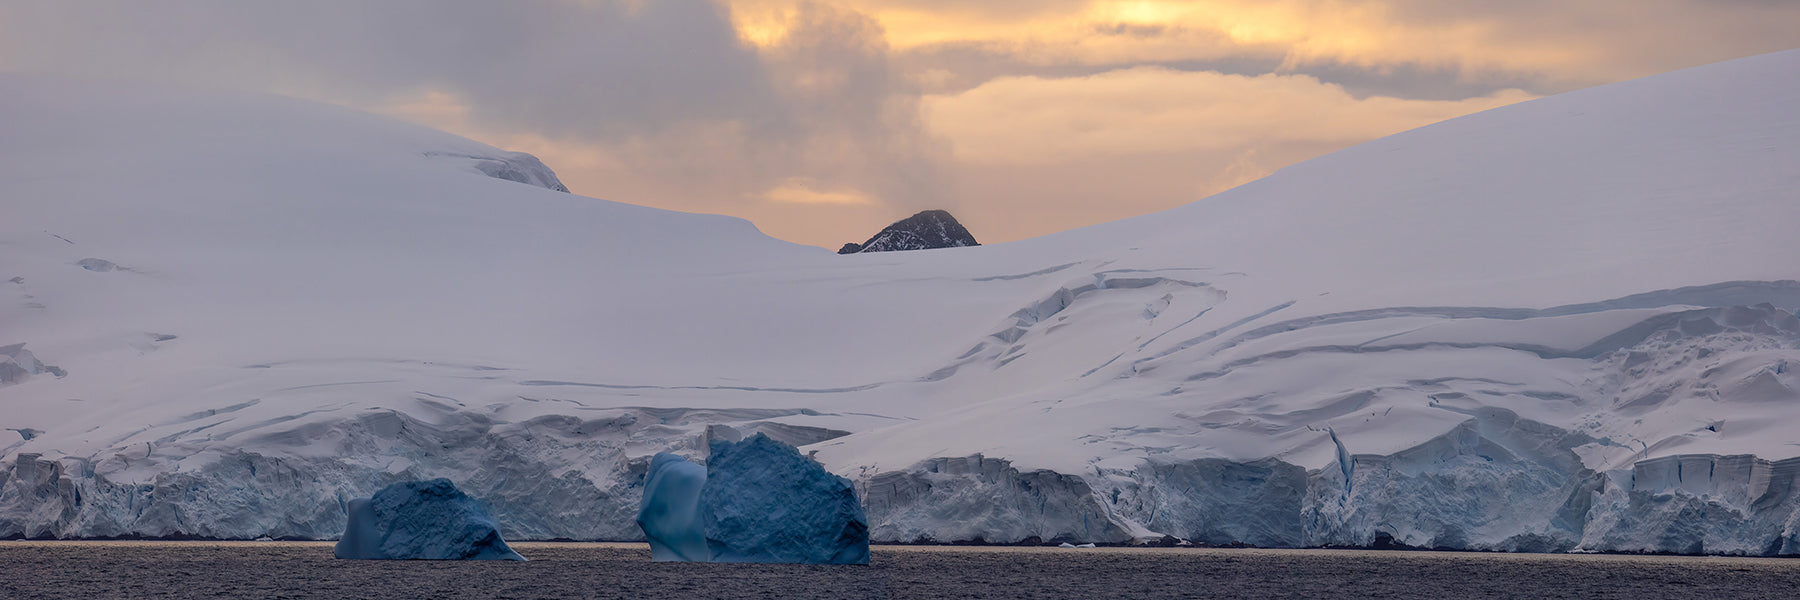 Artem-Shestakov-Antarctica-Landscape